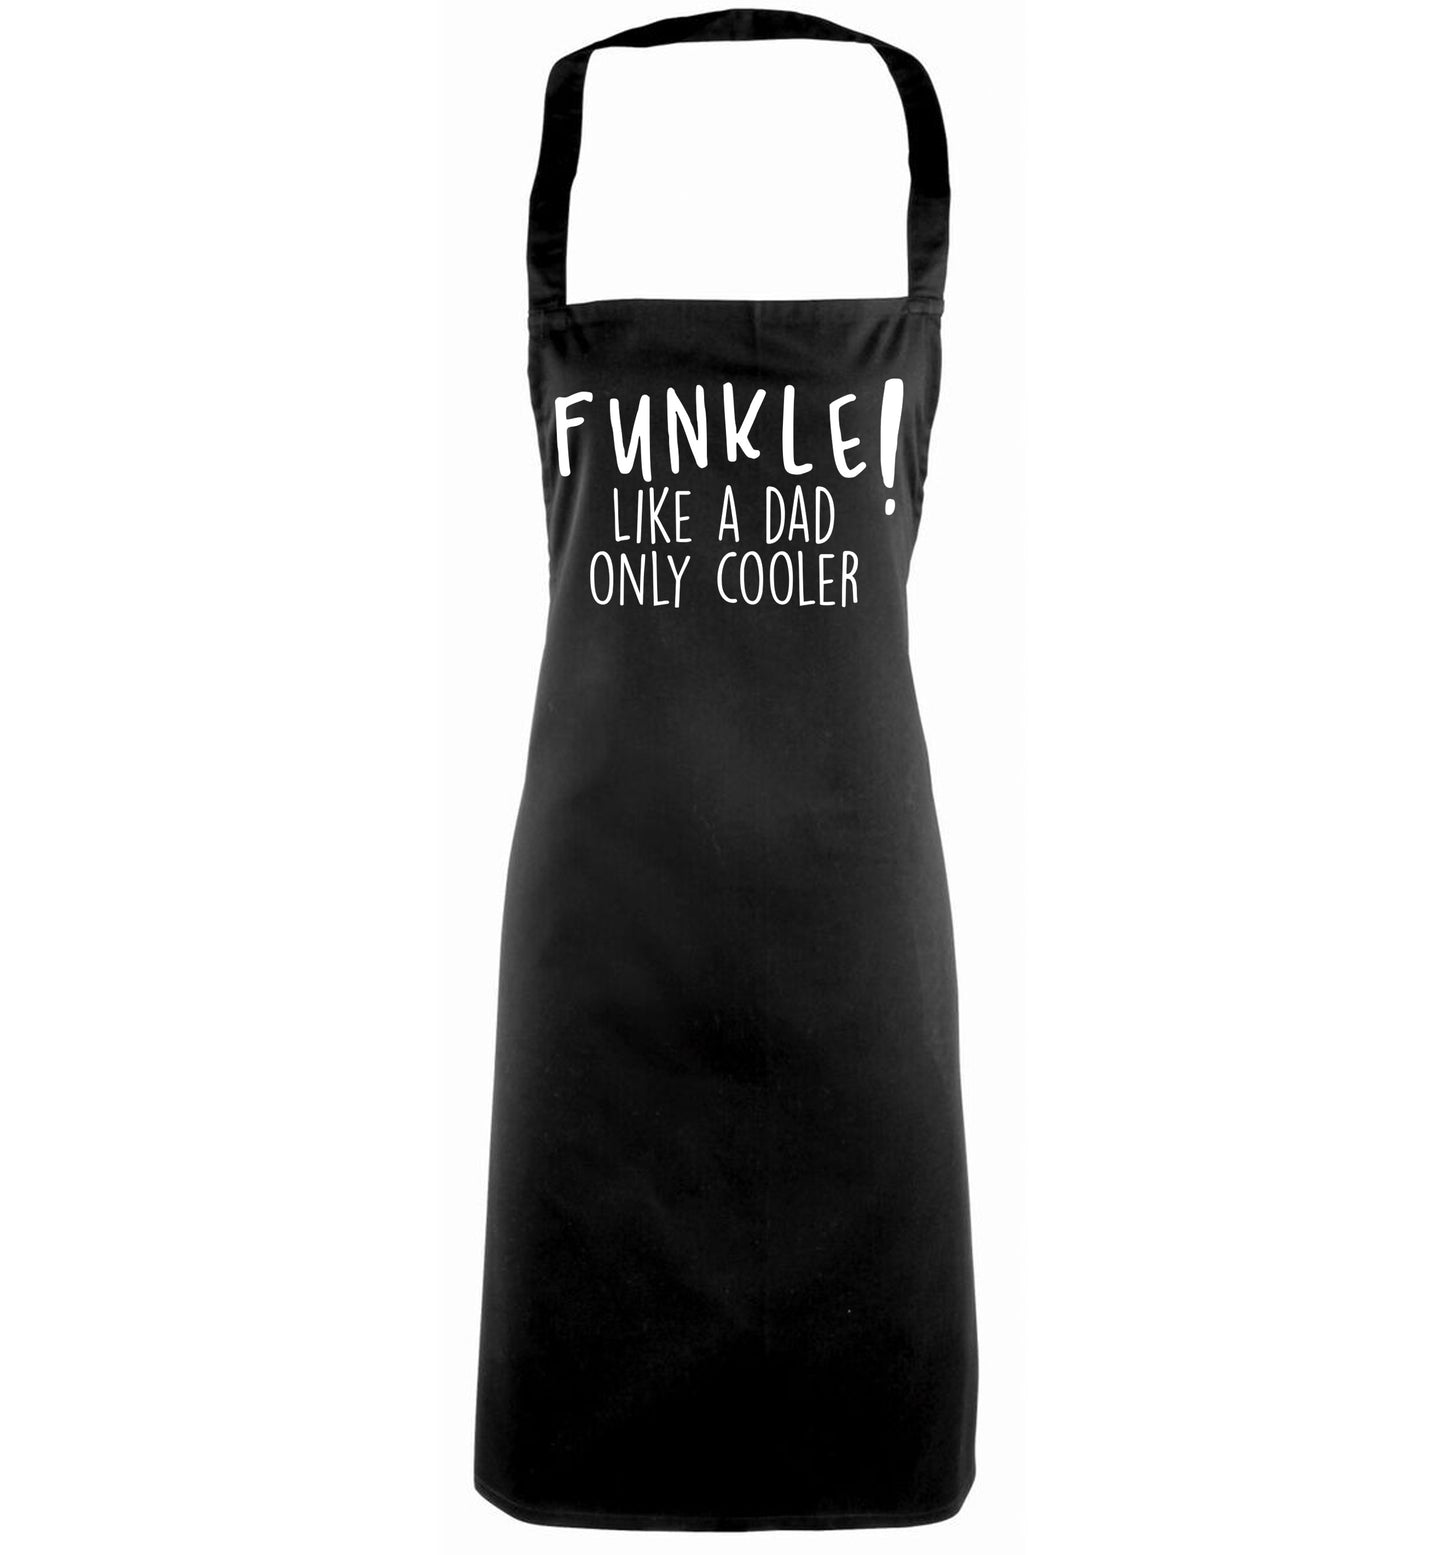 Funkle Like a Dad Only Cooler black apron